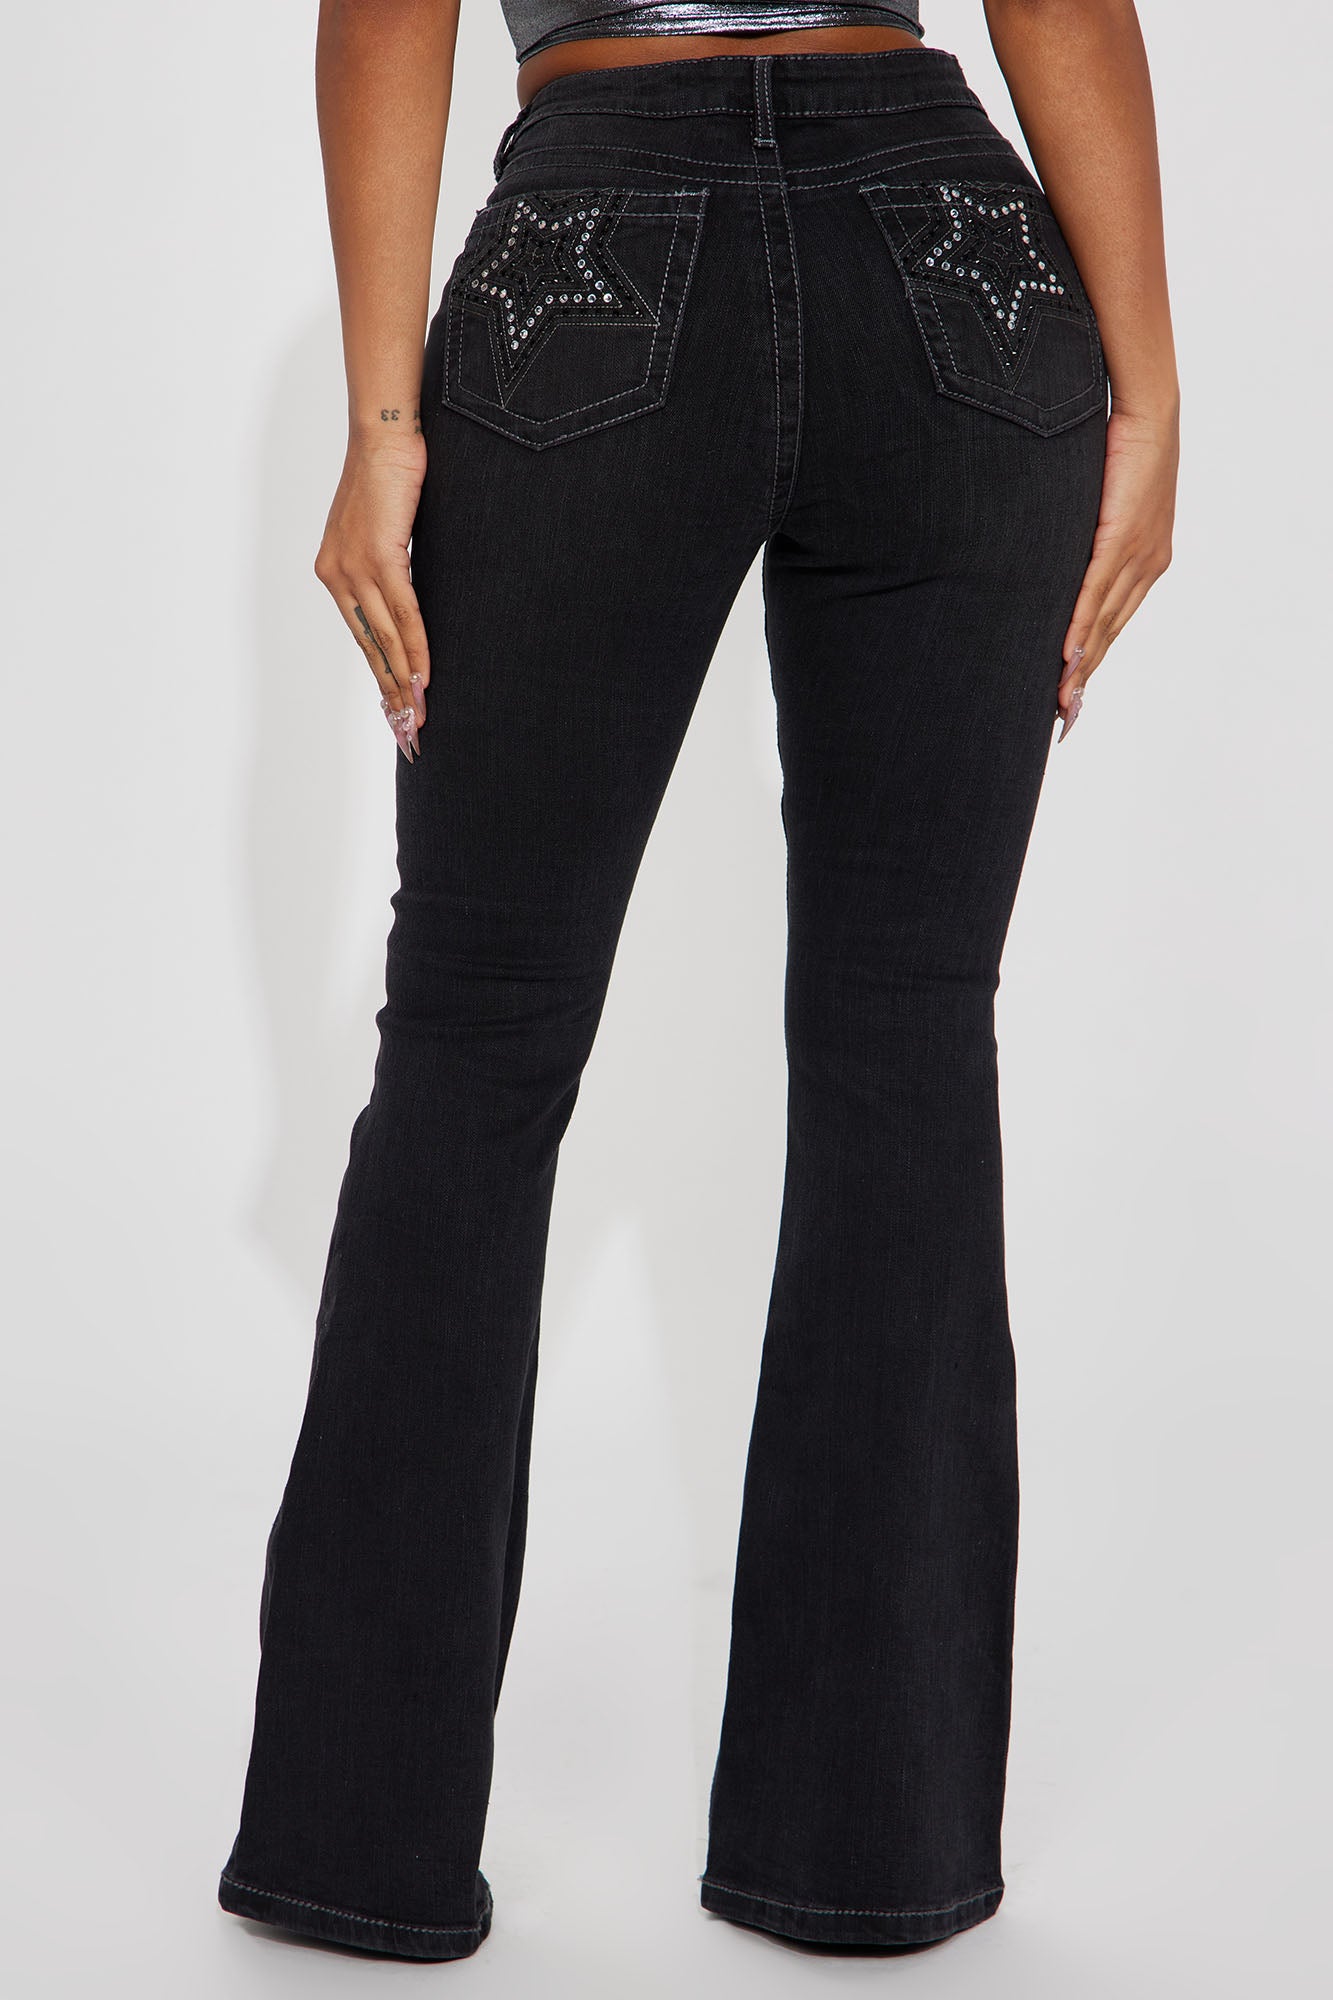 Wish On A Star Embellished Stretch Flare Jean - Black, Fashion Nova, Jeans